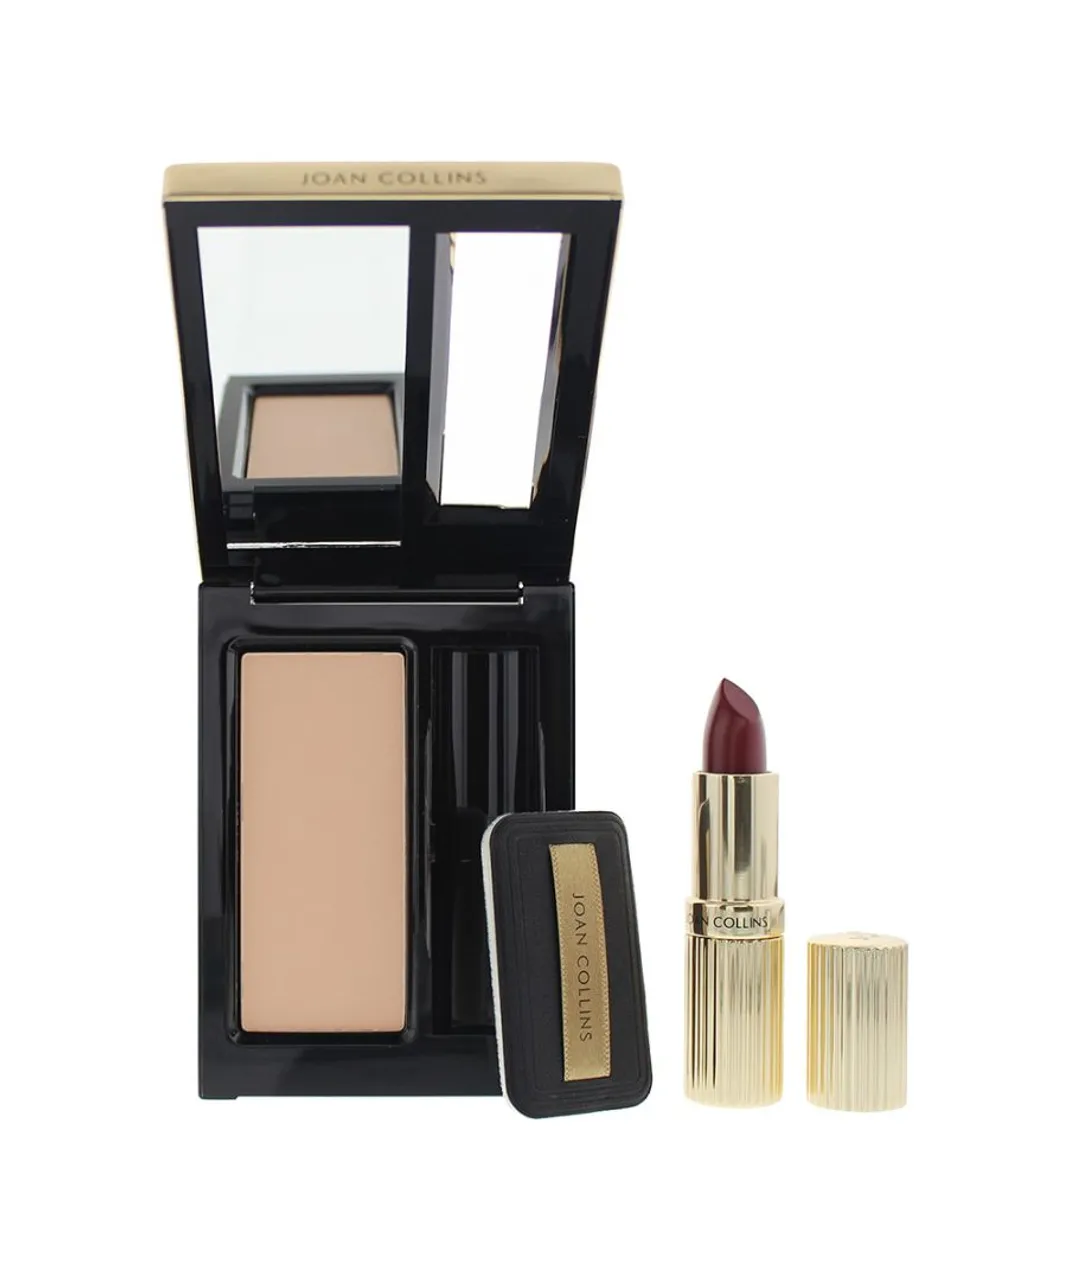 Joan Collins Womens Compact Duo Powder 6g - Helene Cream Lipstick 3.5g - One Size